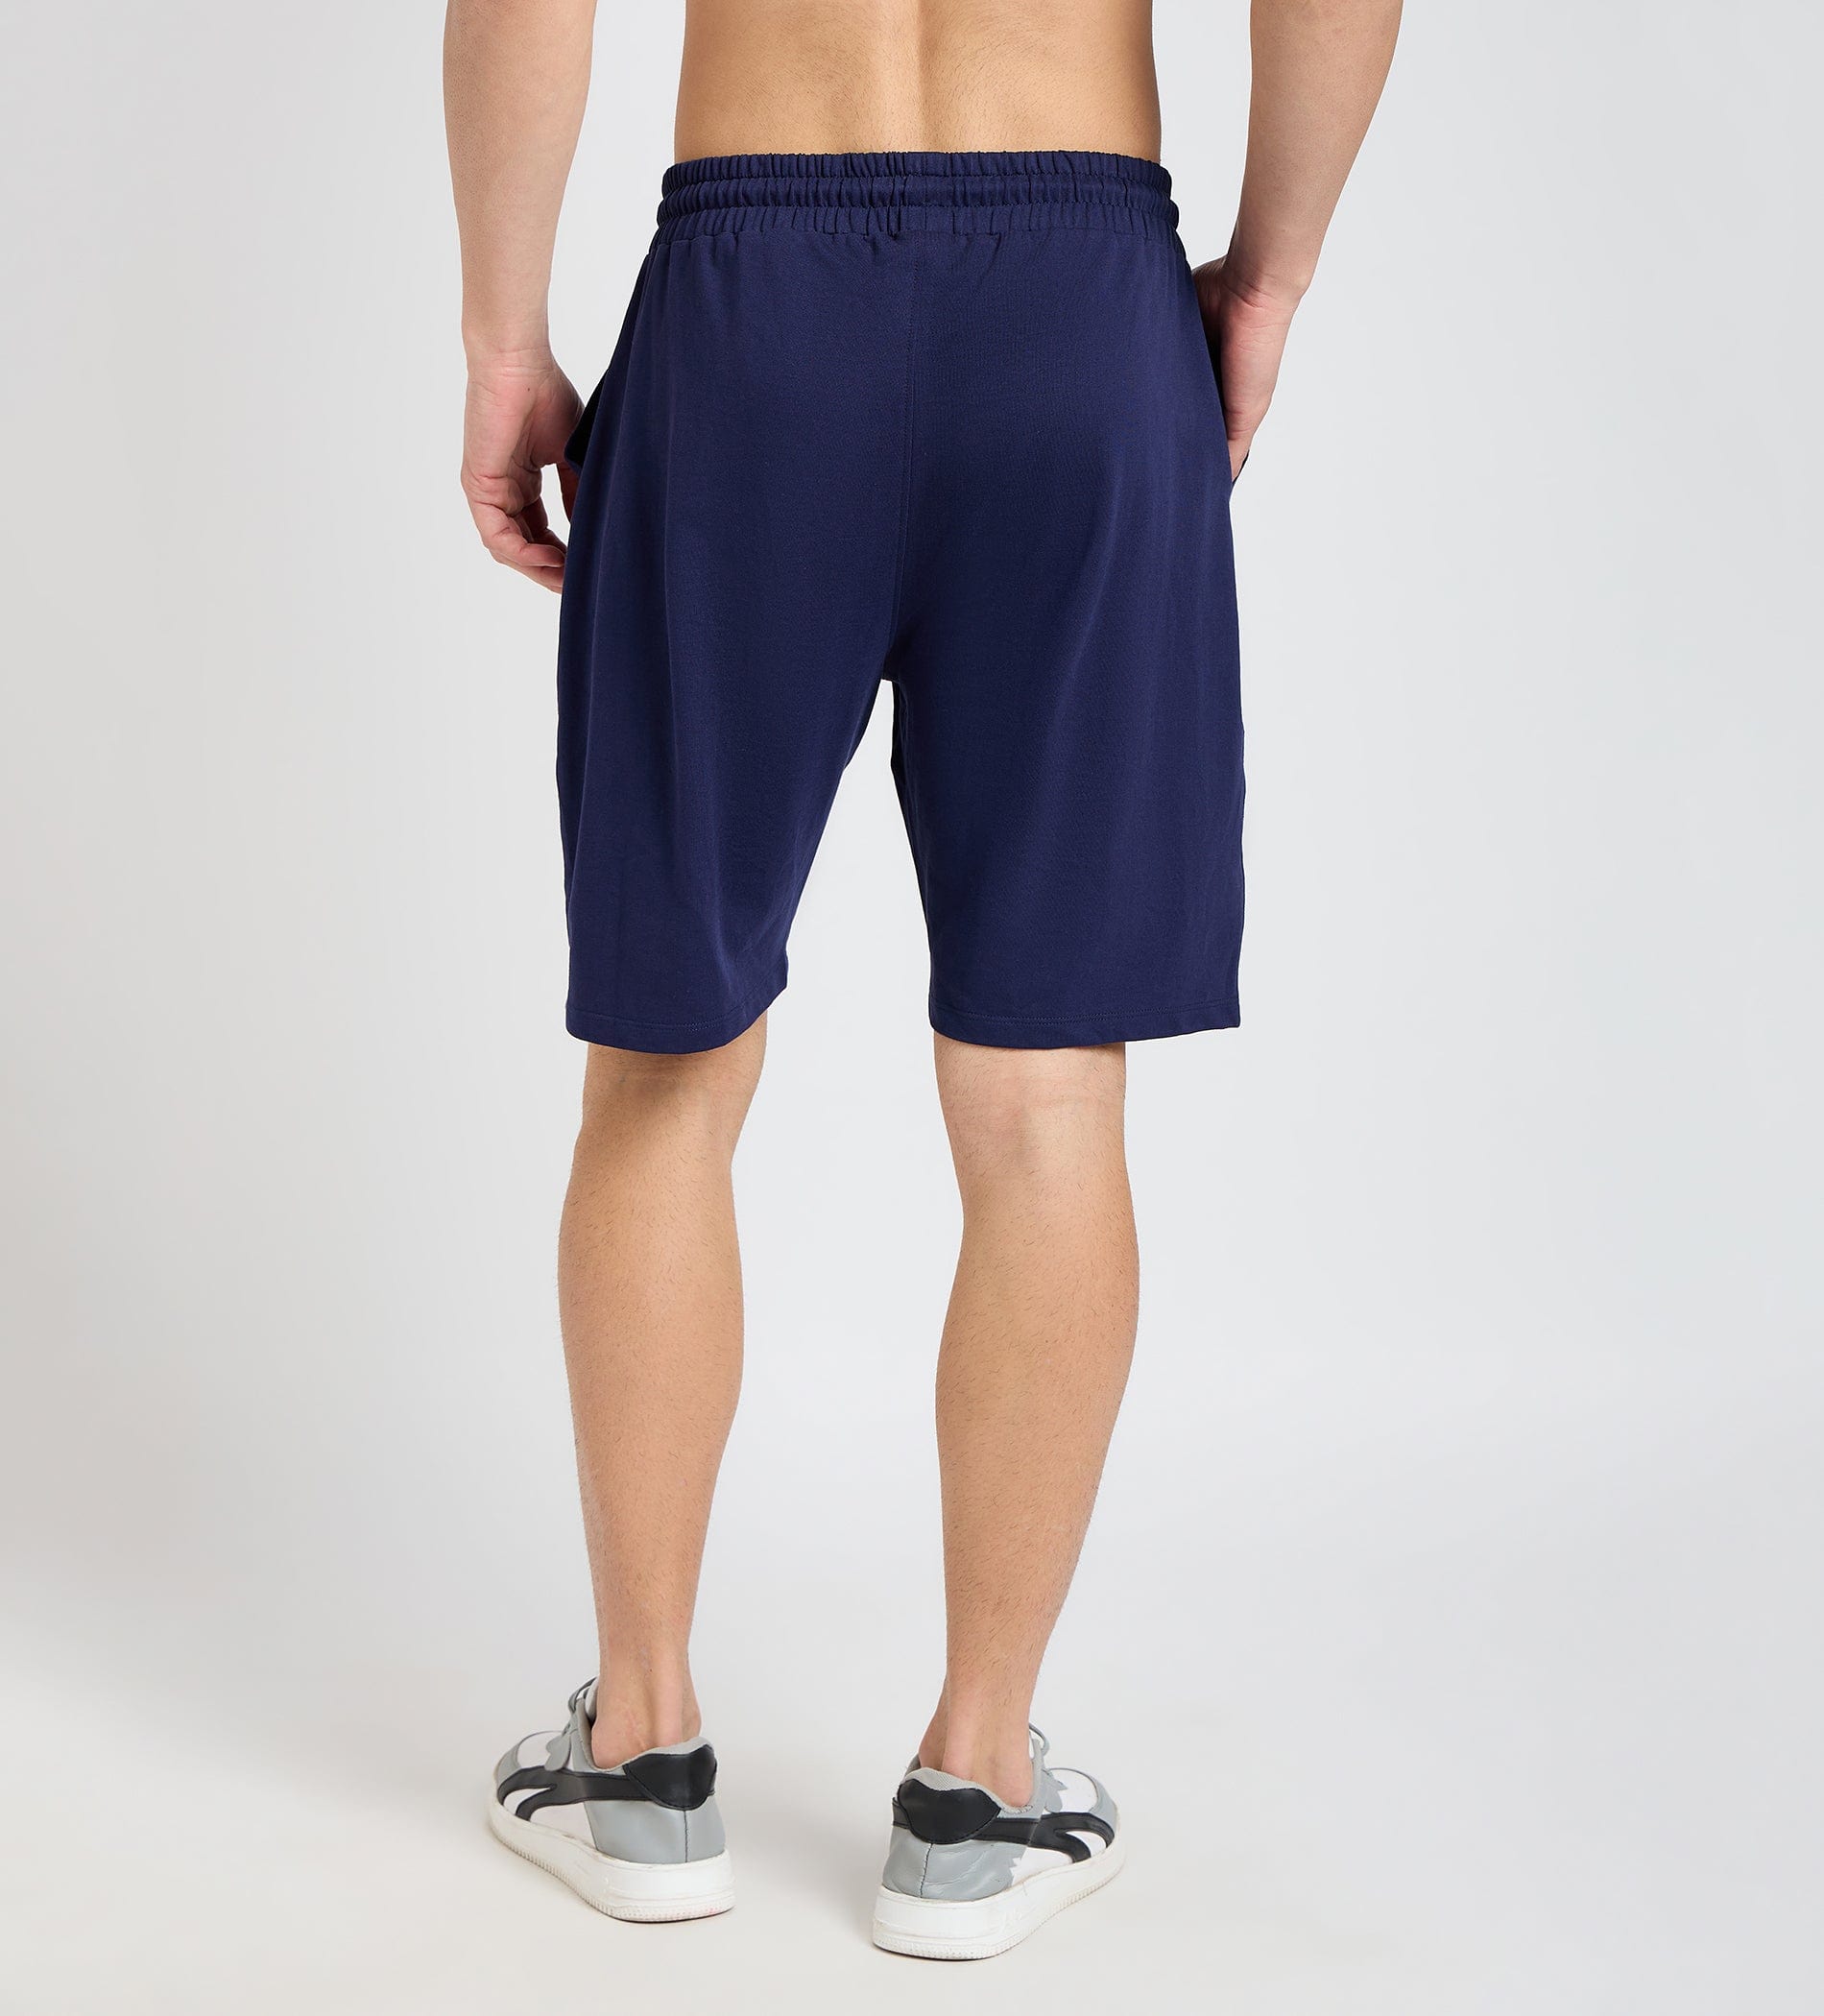 Shorts Shorts Navy Blue Textured pocket Shorts For Men